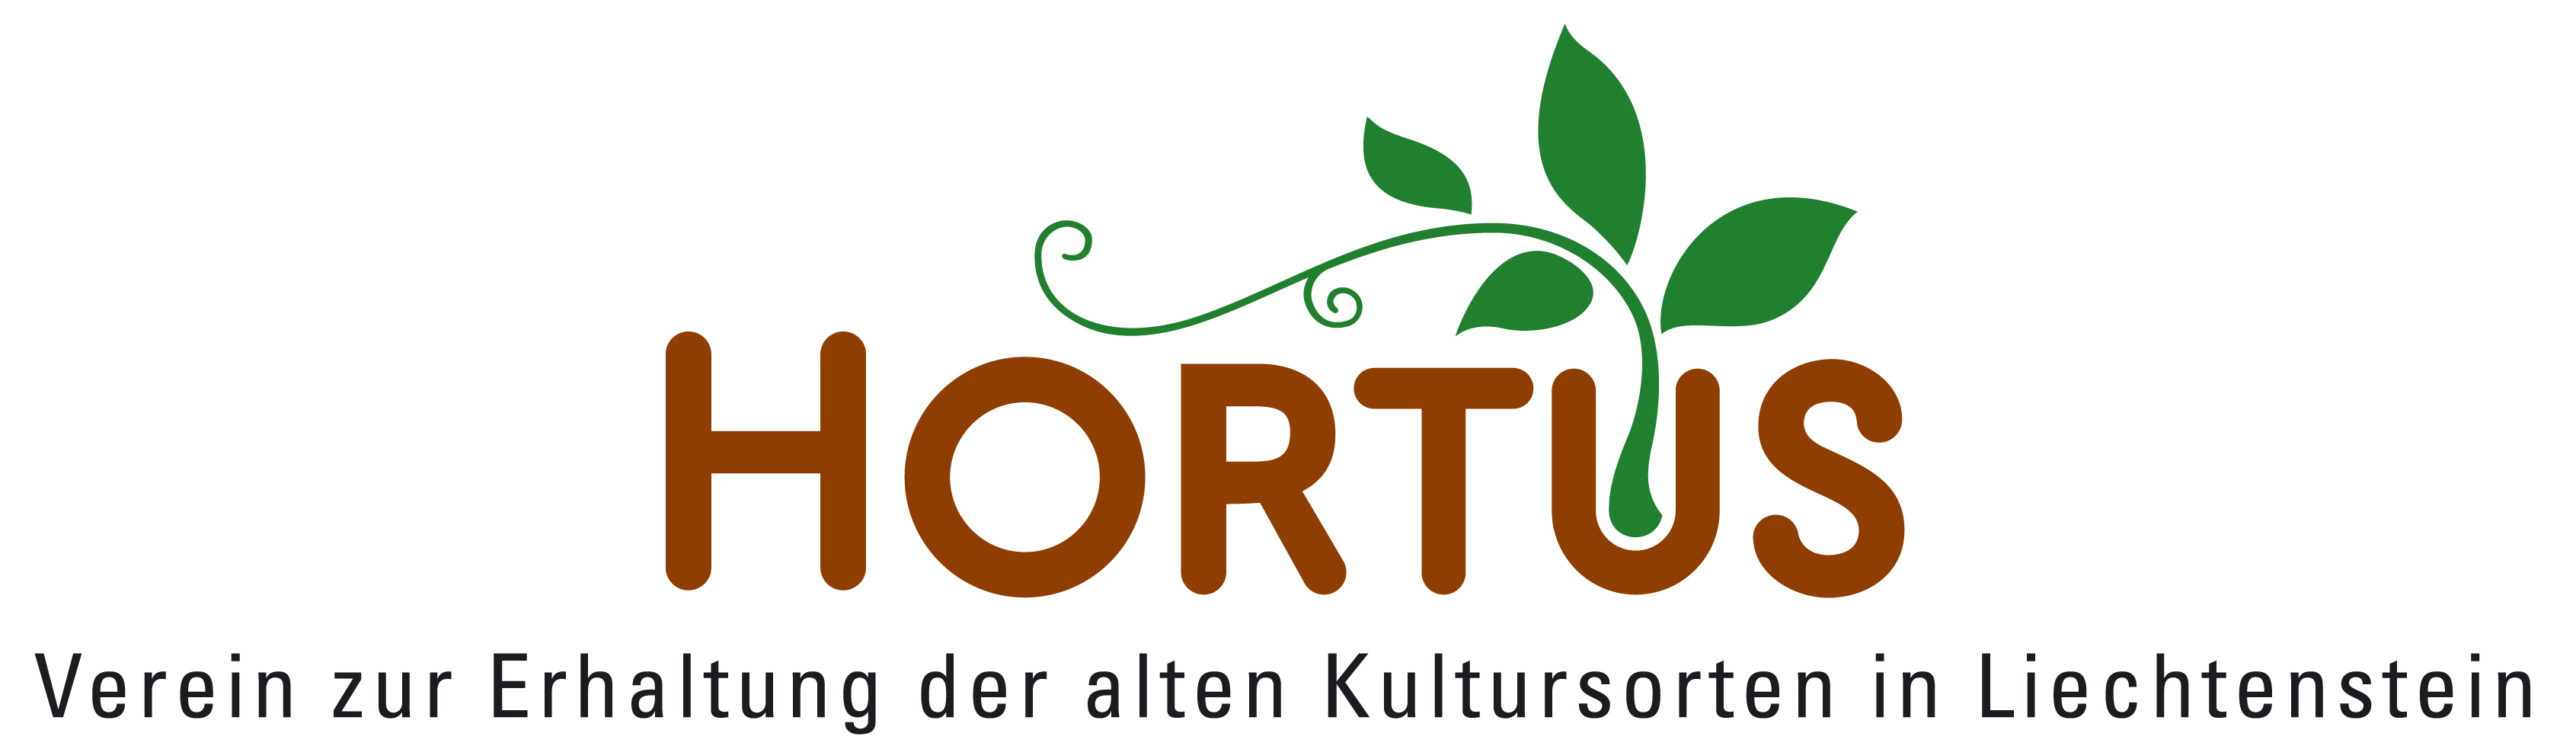 HORTUS Logo